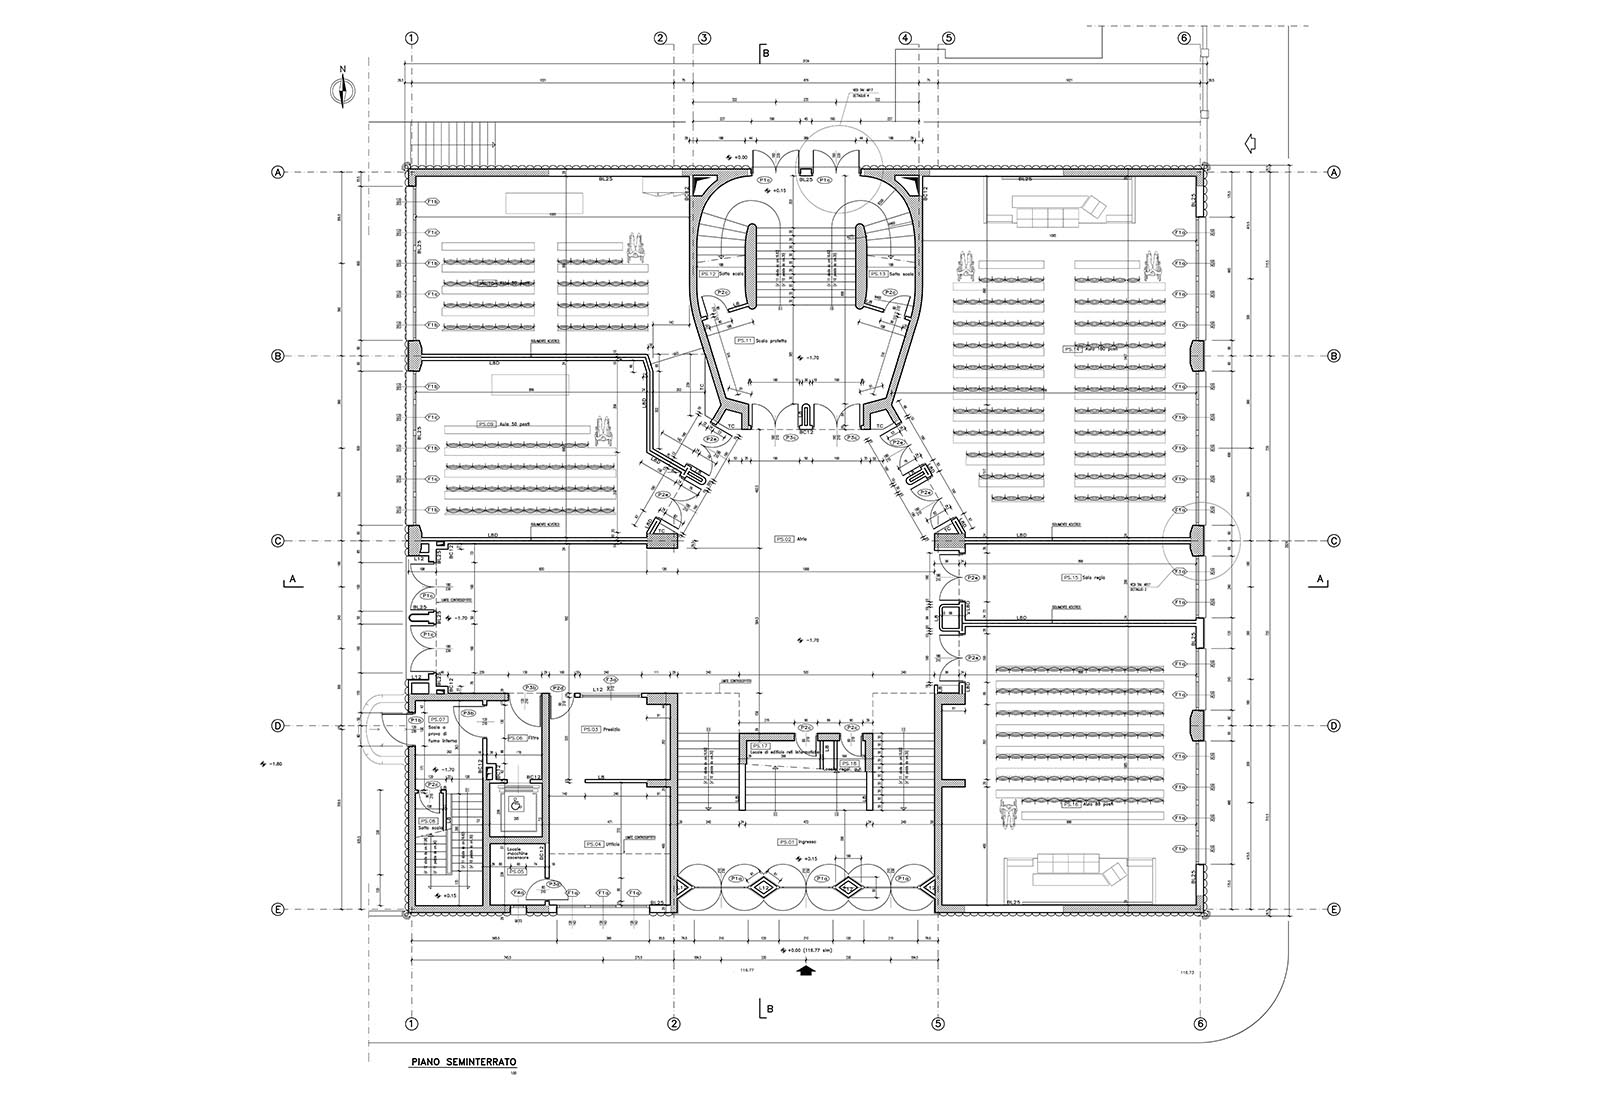 Building 25 Politecnico di Milano - Basement floor plan furnished